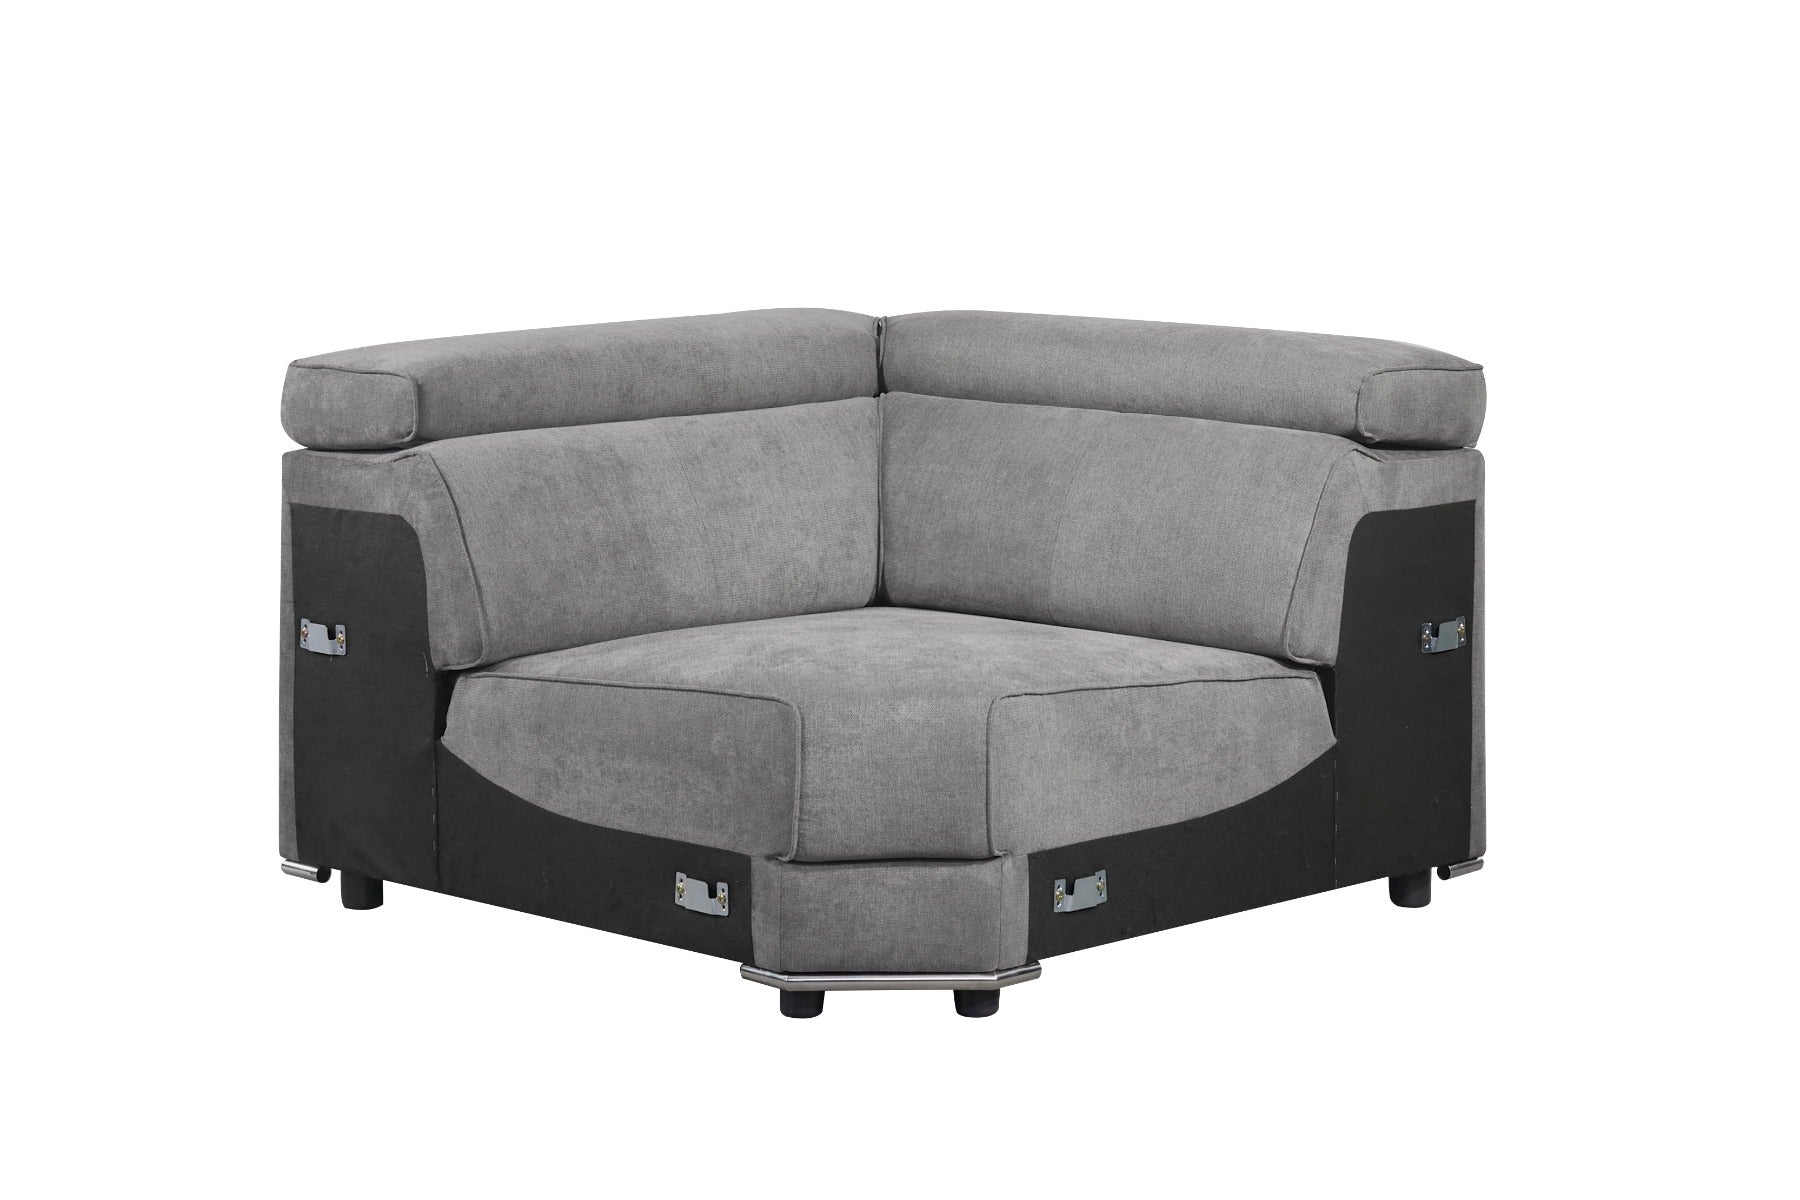 ACME Furniture Sofas & Couches - Alwin Modular Wedge, Dark Gray Fabric (53721)